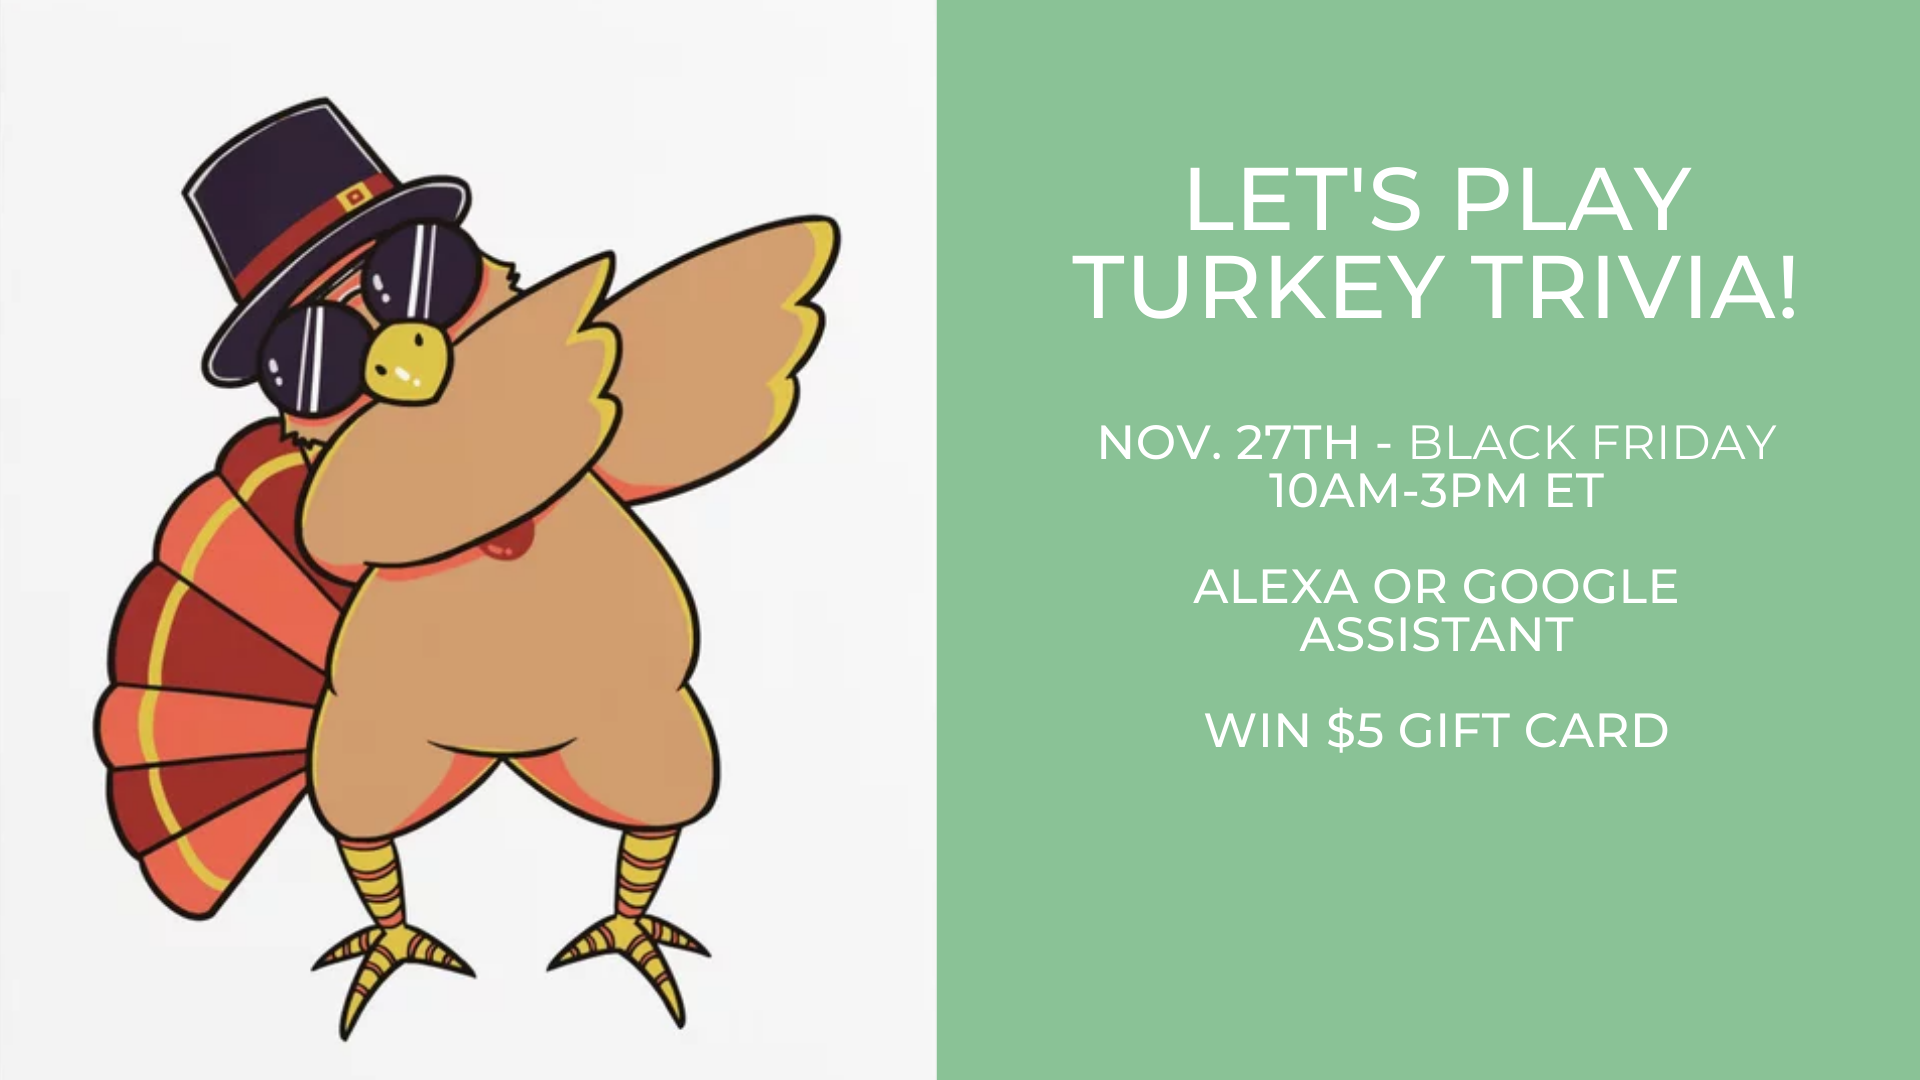 Let's play turkey trivia this Black Friday